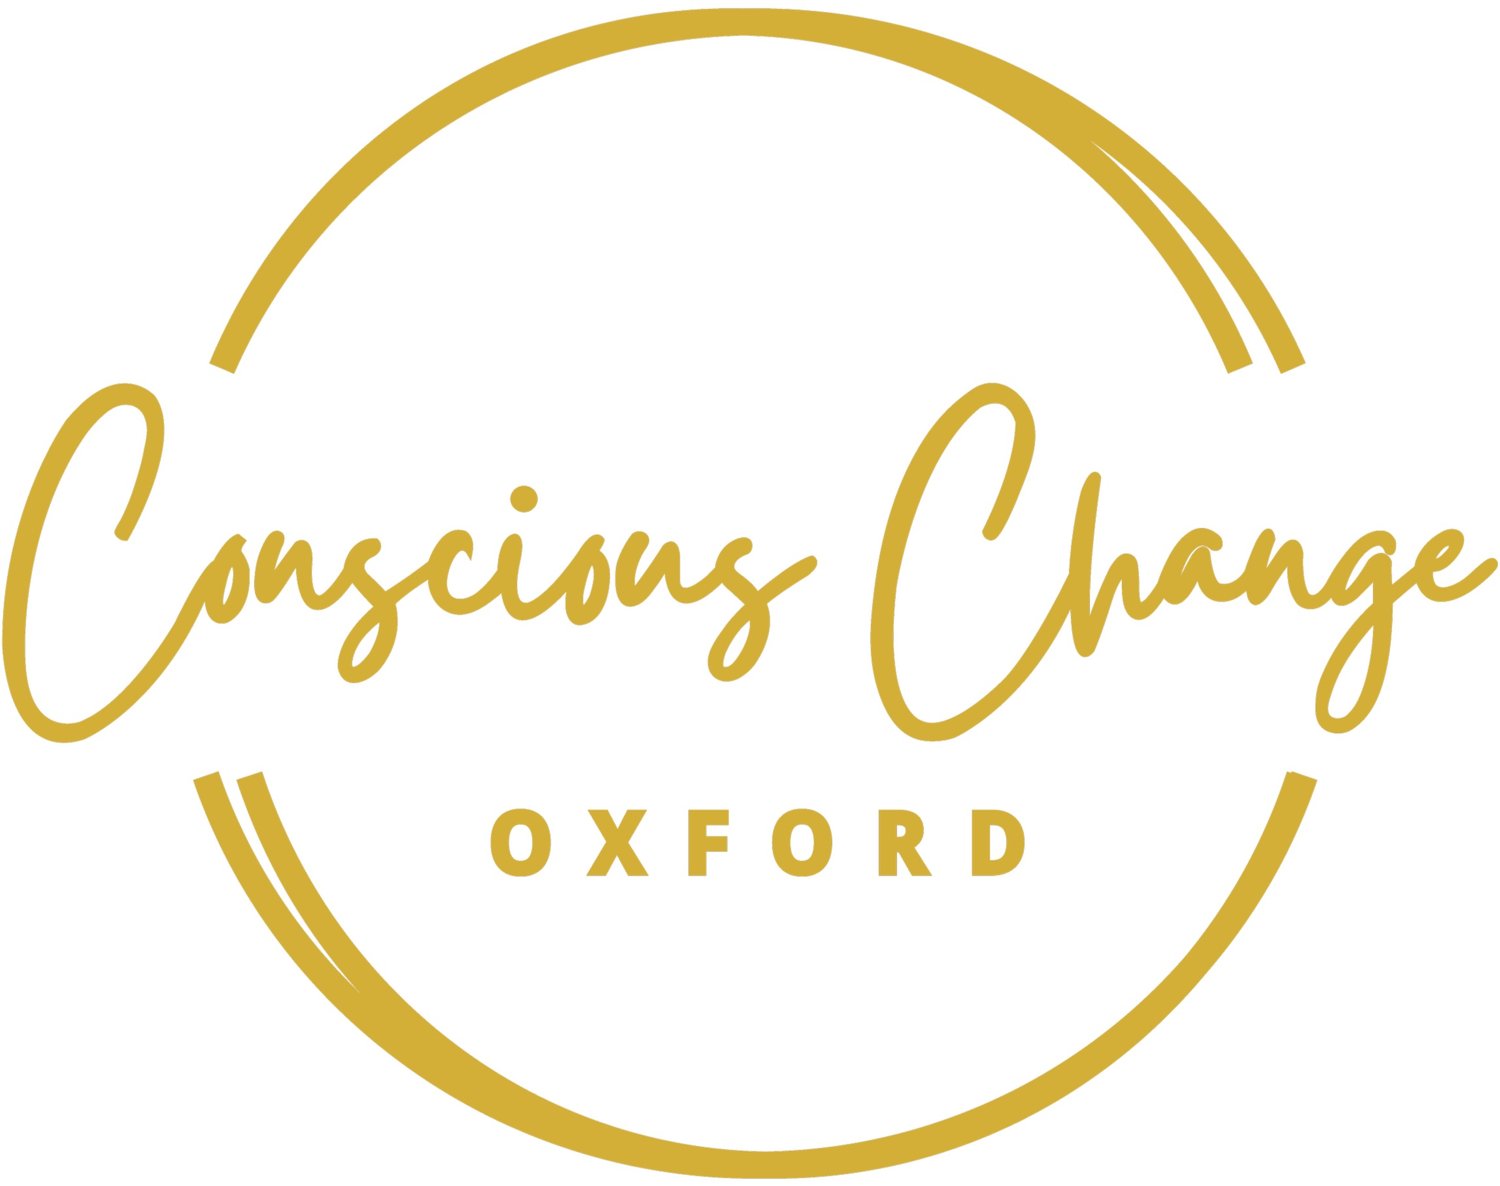 Conscious Change Oxford